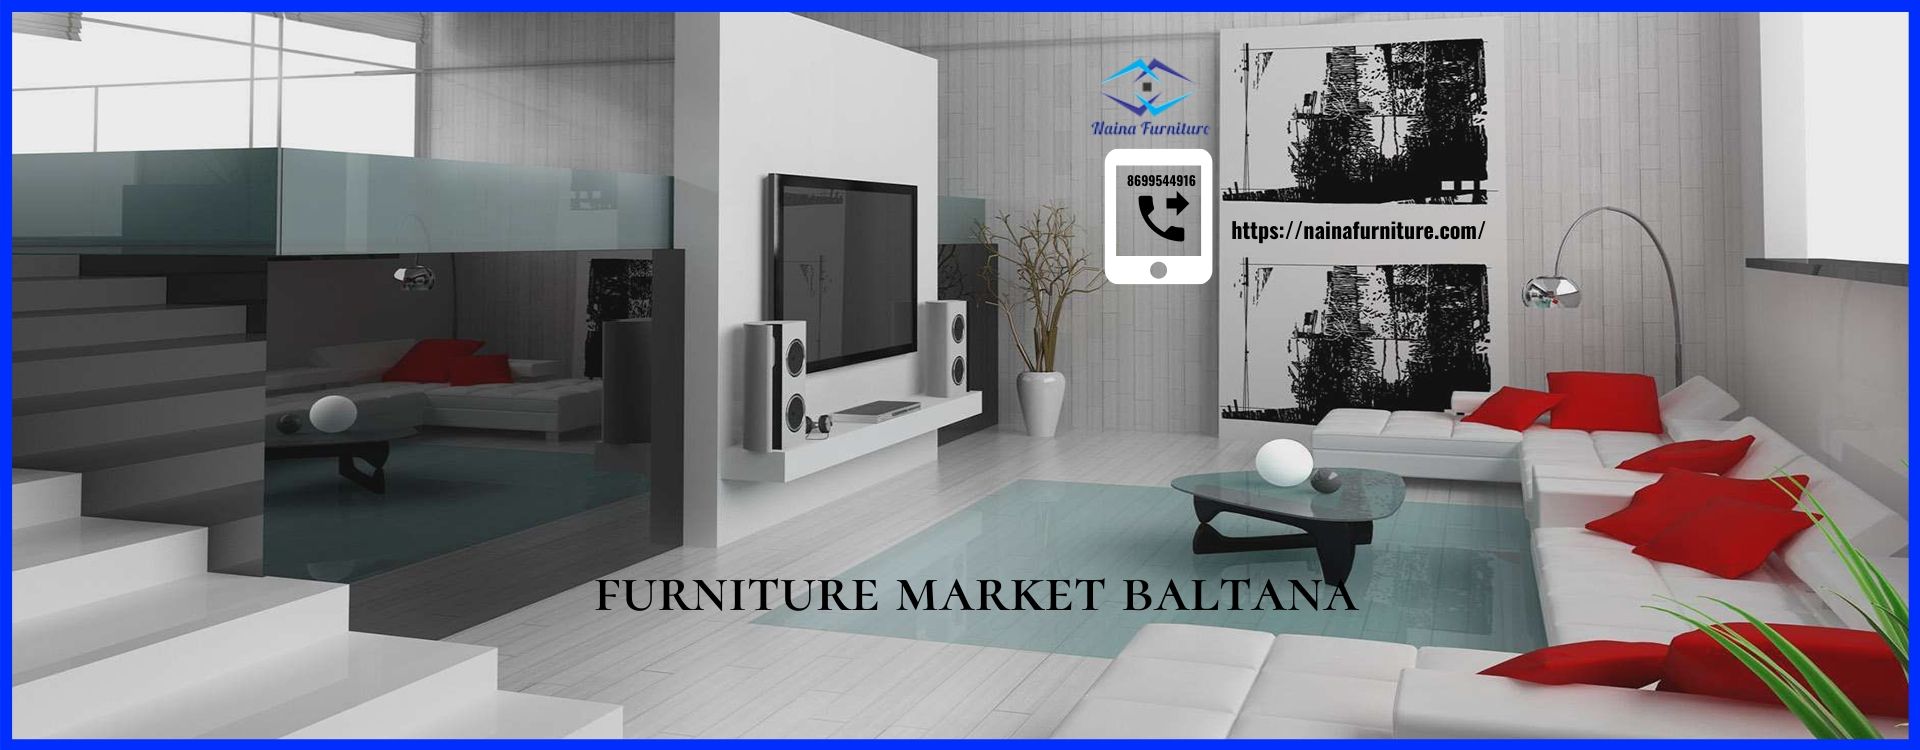 furniture market baltana.jpg